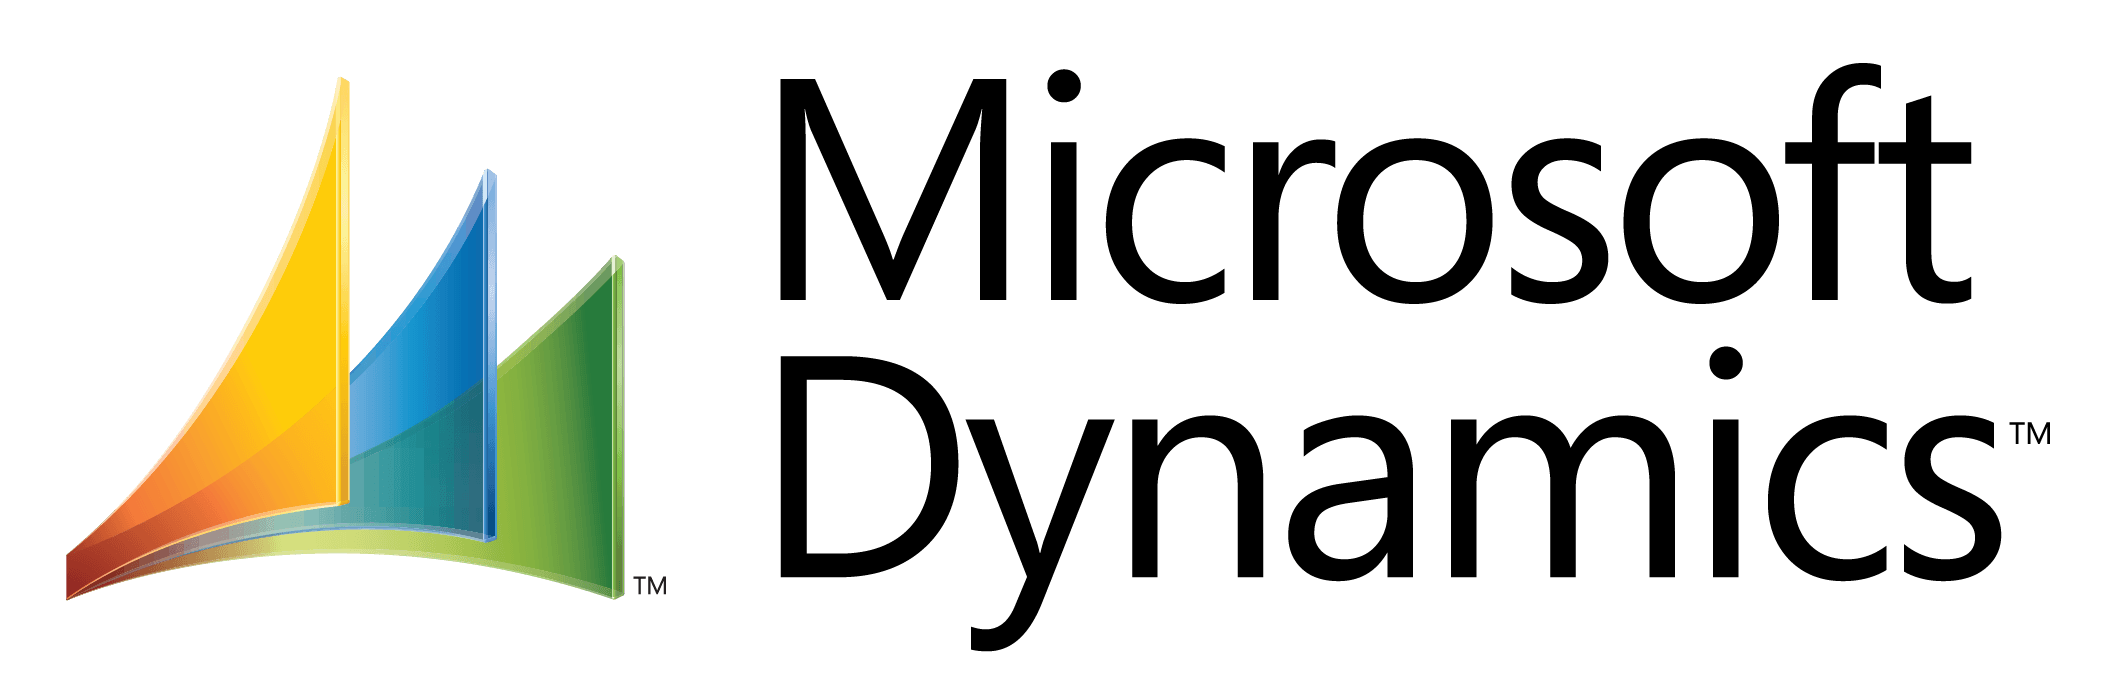 Microsoft Dynamics Business Solutions Logo - CRM Solutions | Data8 Integrated Solutions | Data8